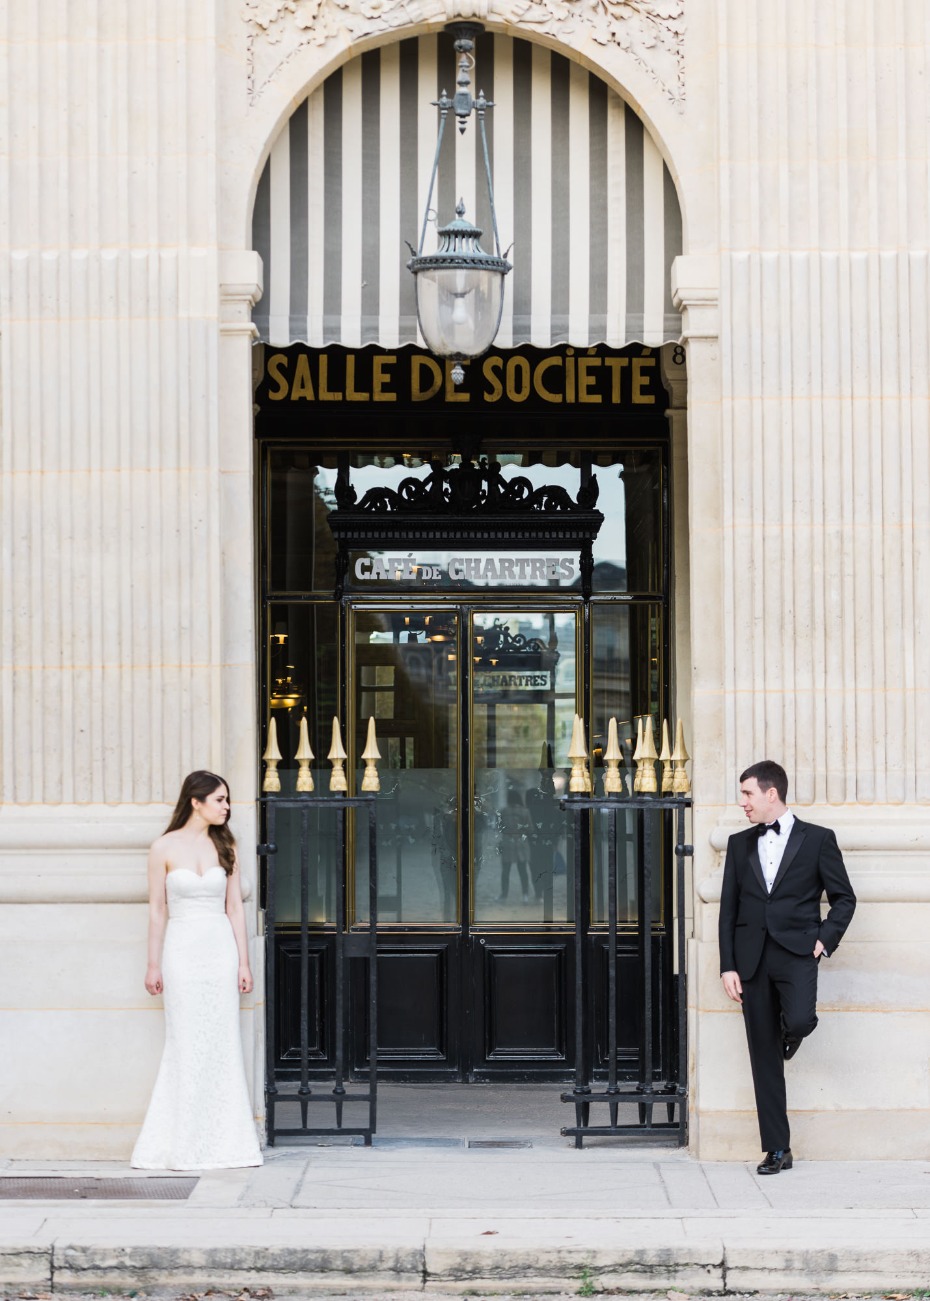 A wedding in Paris